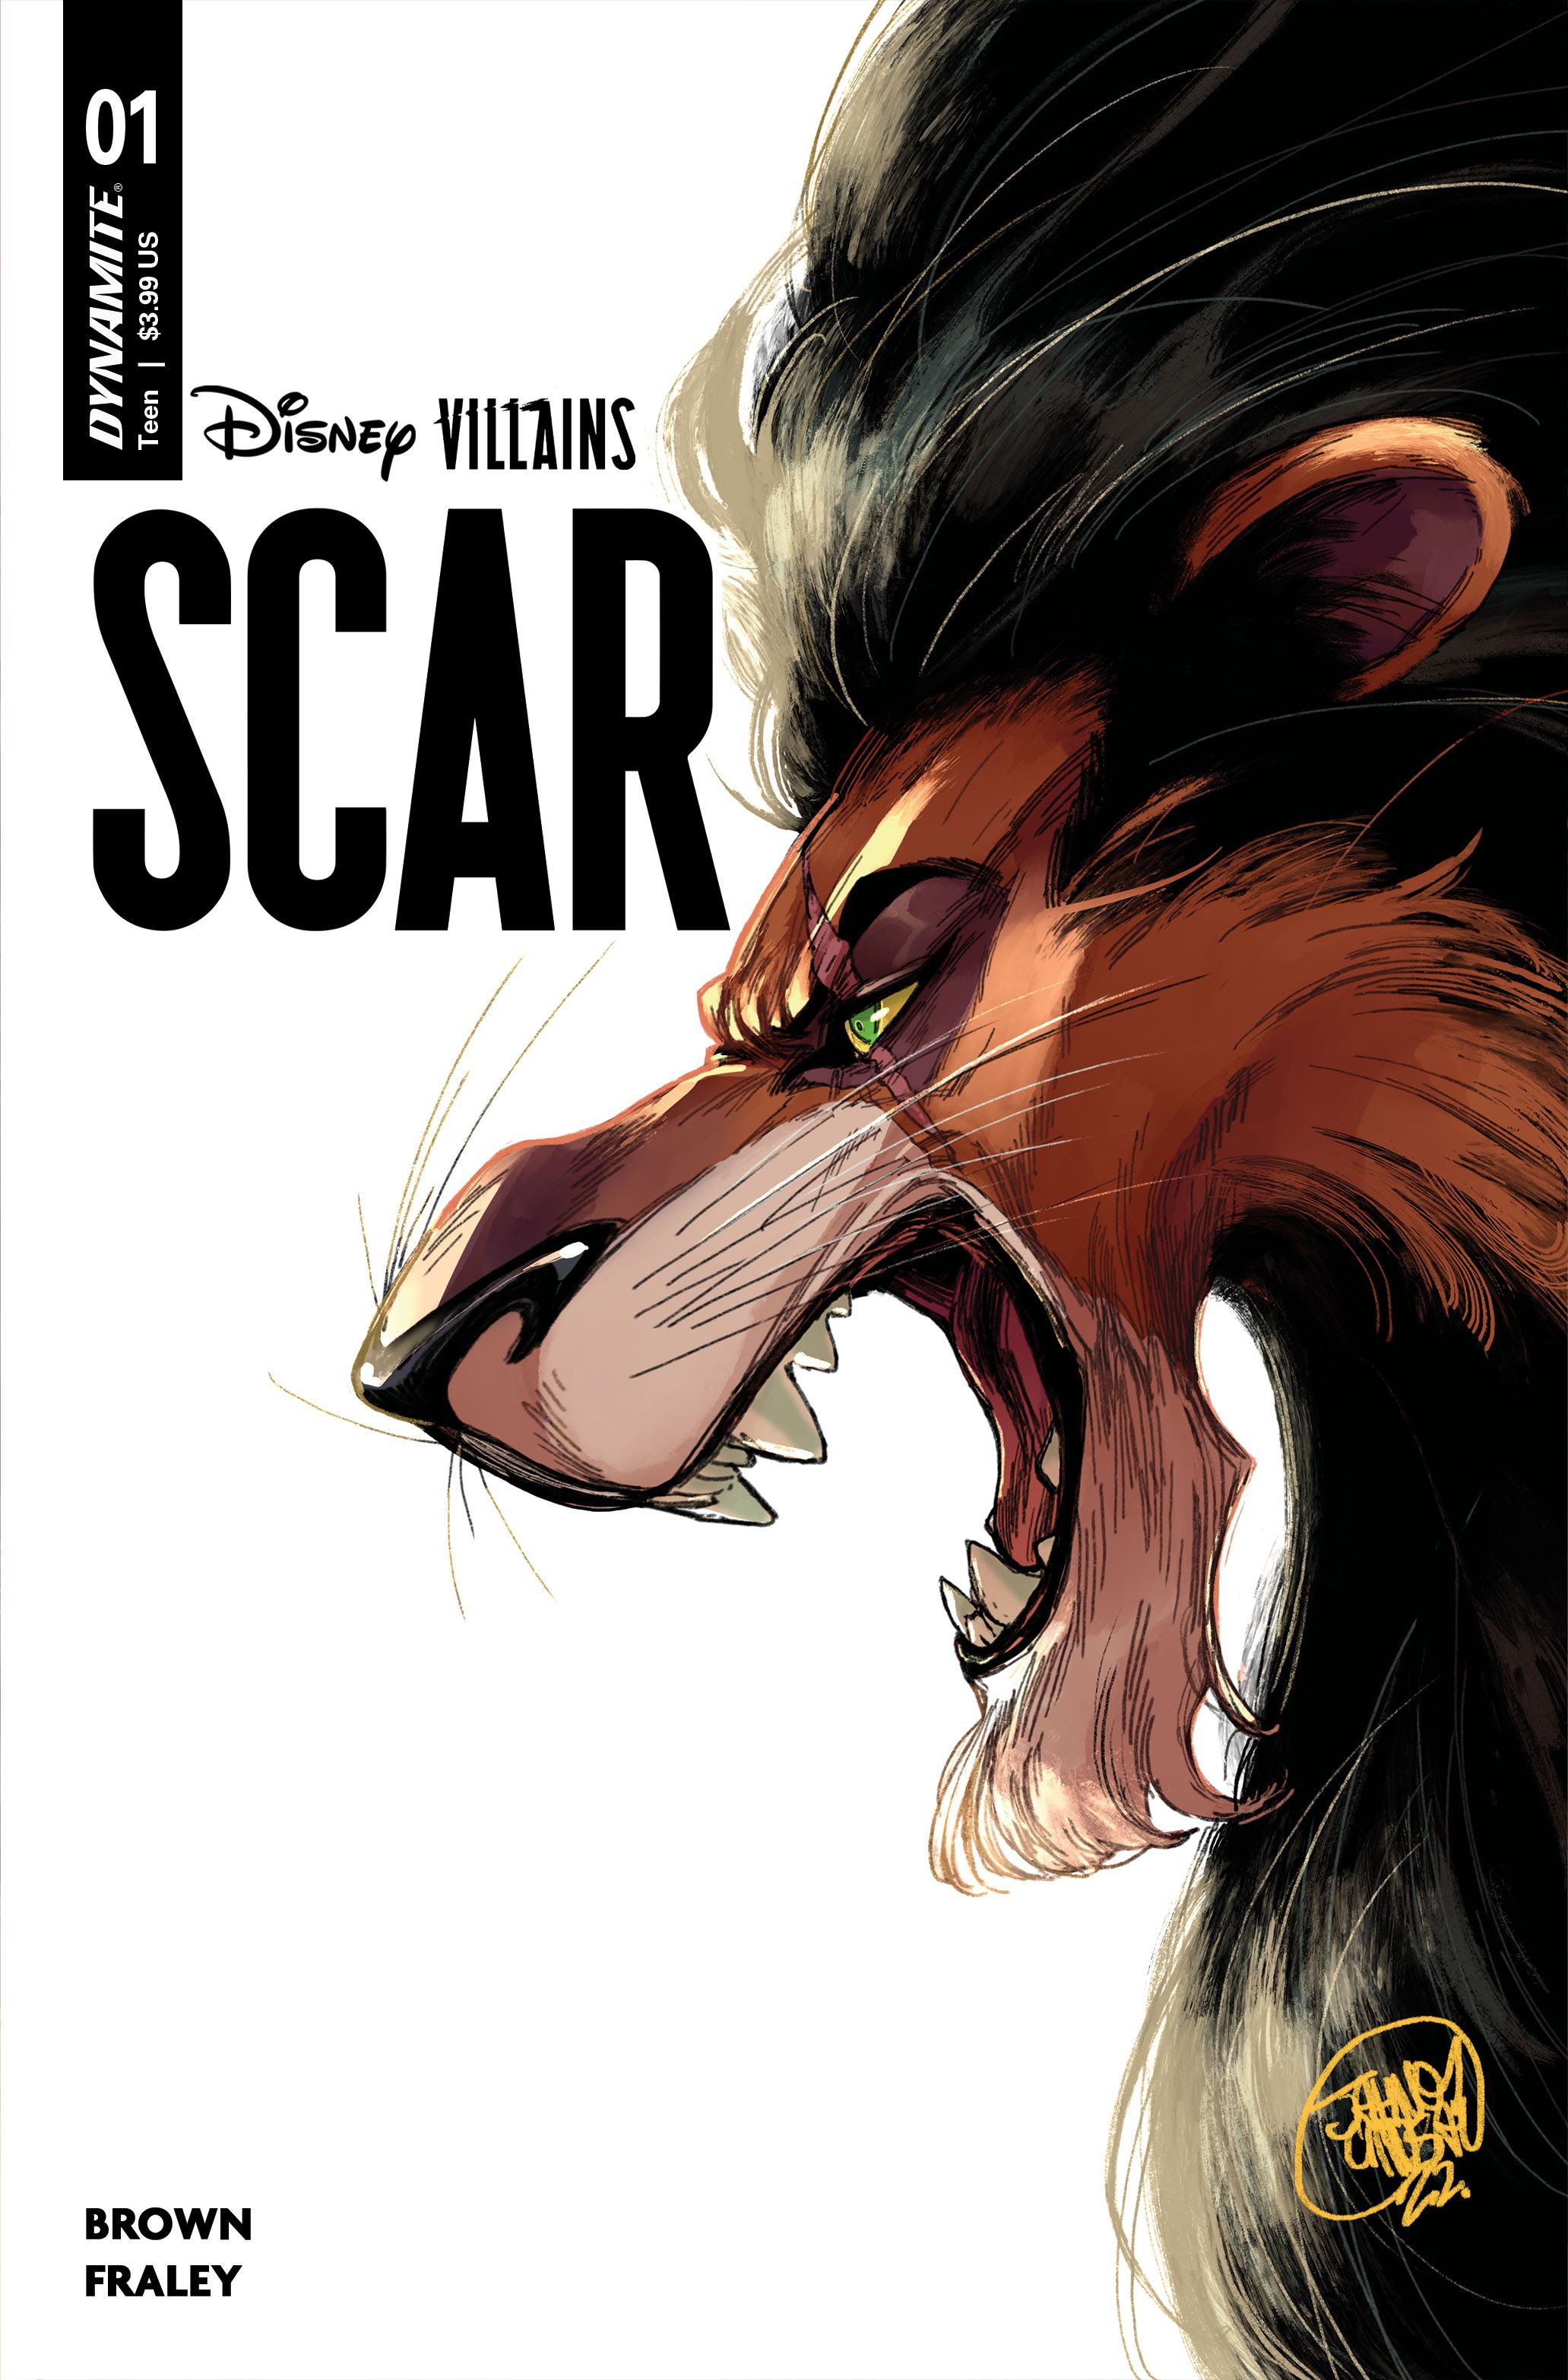 Disney Villains: Scar #1 cover